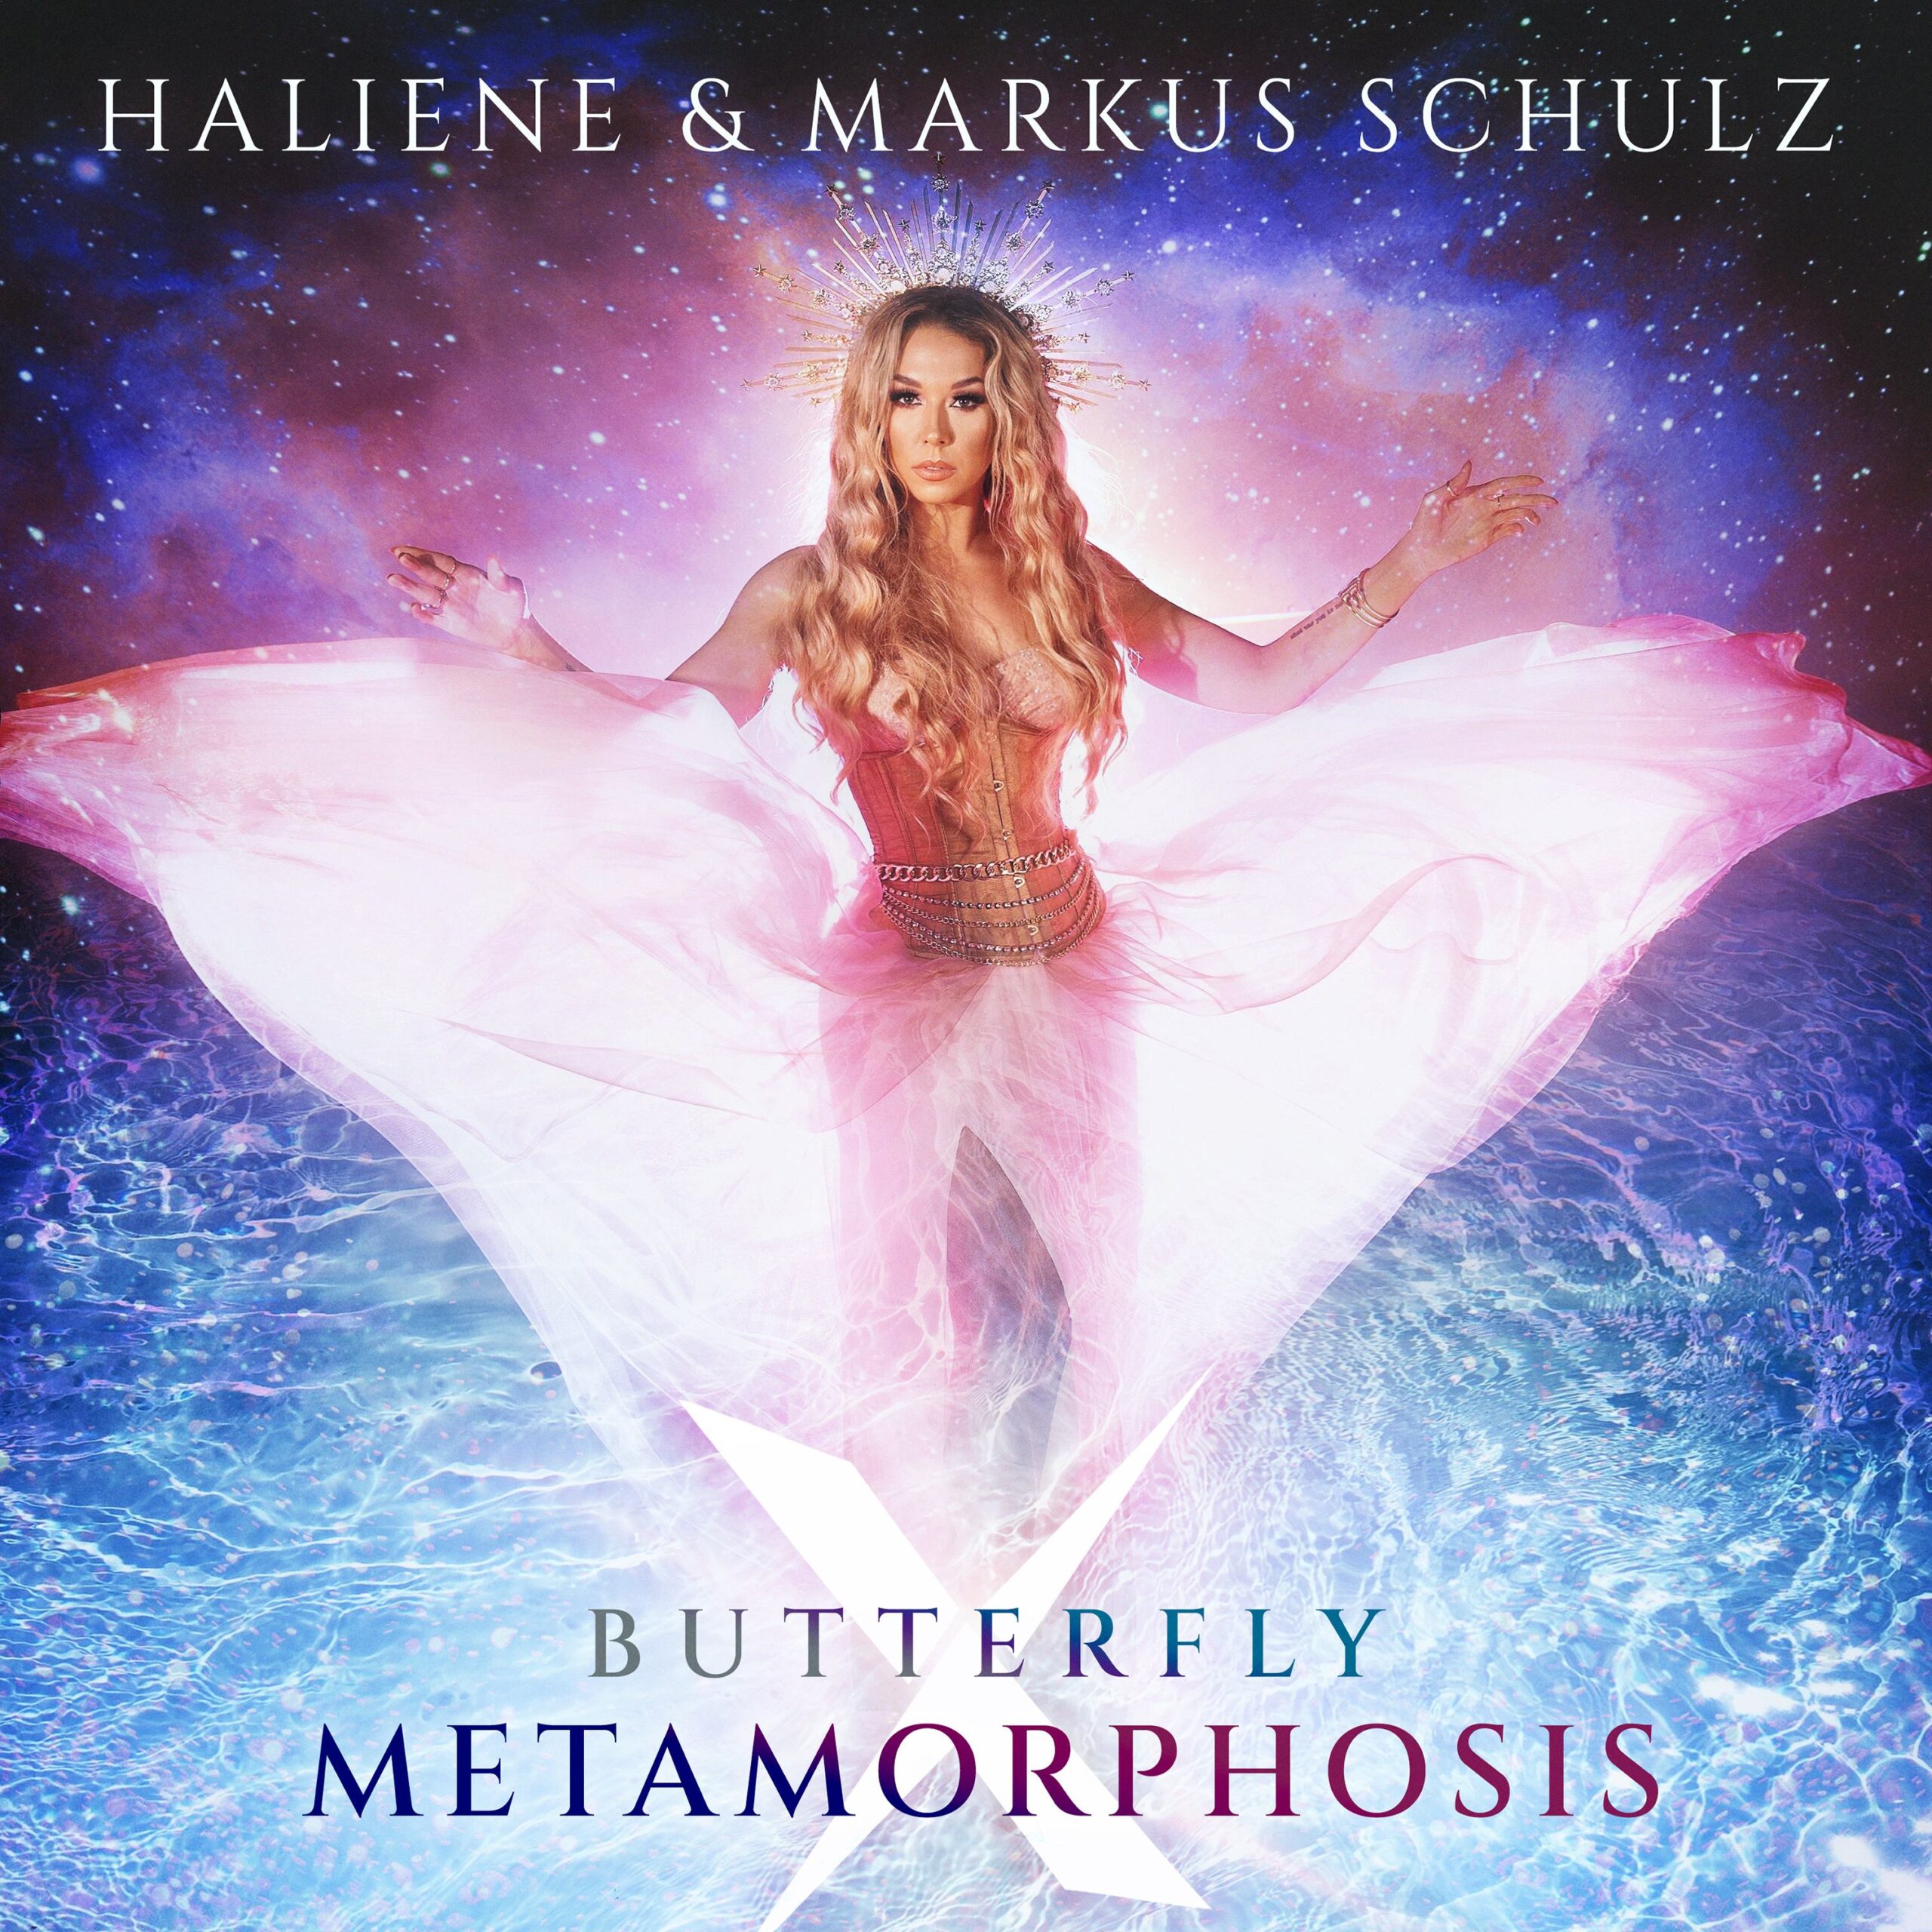 HALIENE x Markus Schulz presents Butterfly x Metamorphosis on Black Hole Recordings